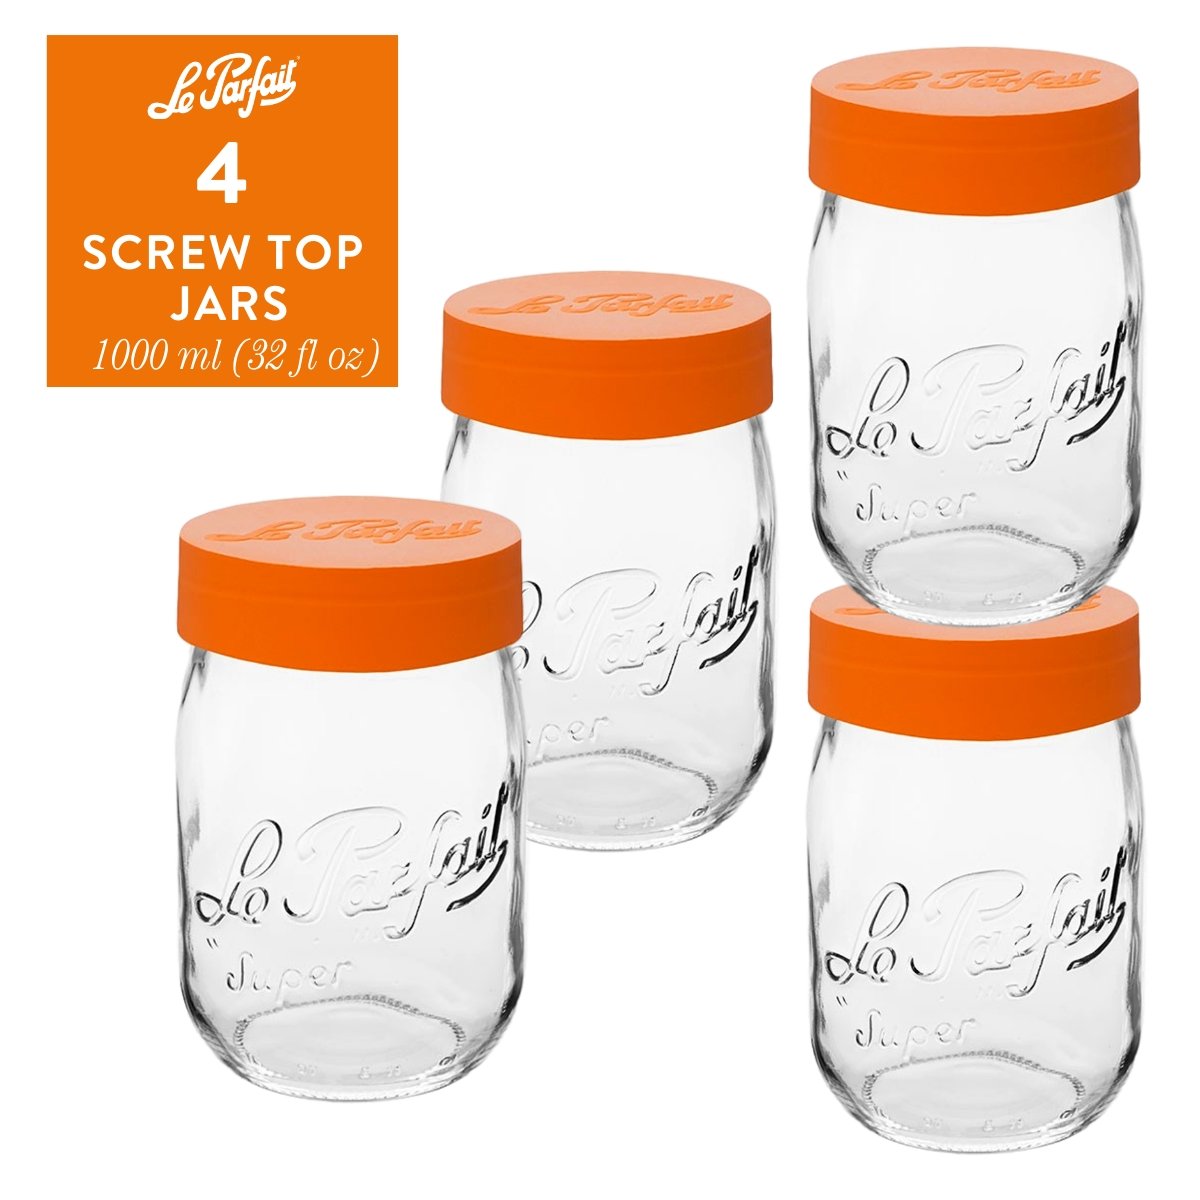 Le Parfait Screw Top Jars – Large French Glass Jars For Pantry Storage  Preserving Bulk Goods, 3 pk MIX / 64 fl oz - Fry's Food Stores